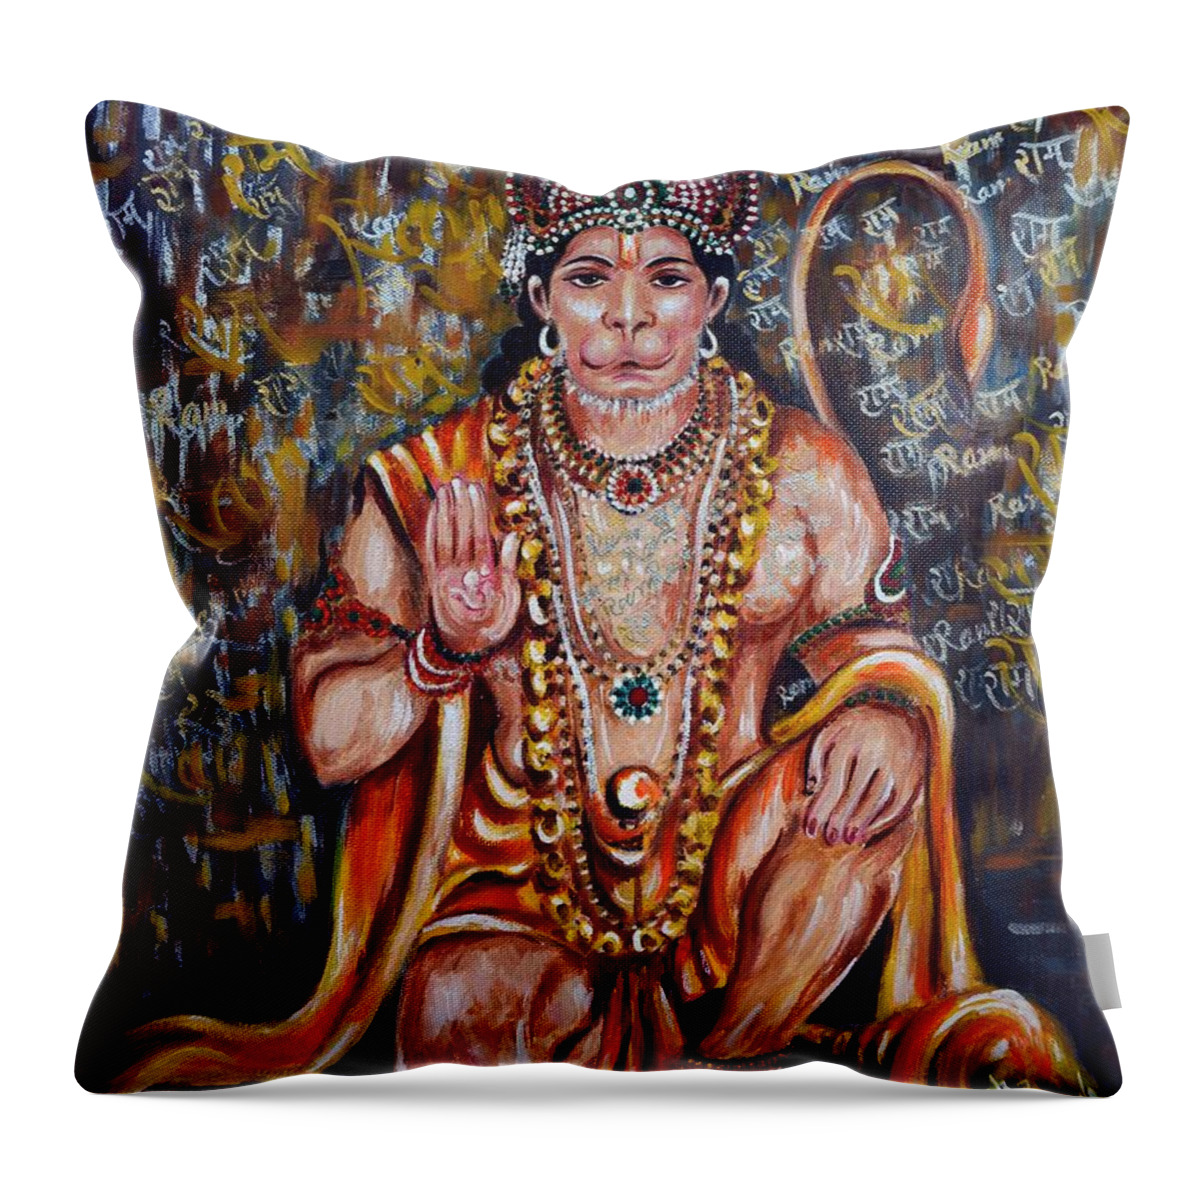 Hanuman Throw Pillow featuring the painting Hanuman by Harsh Malik